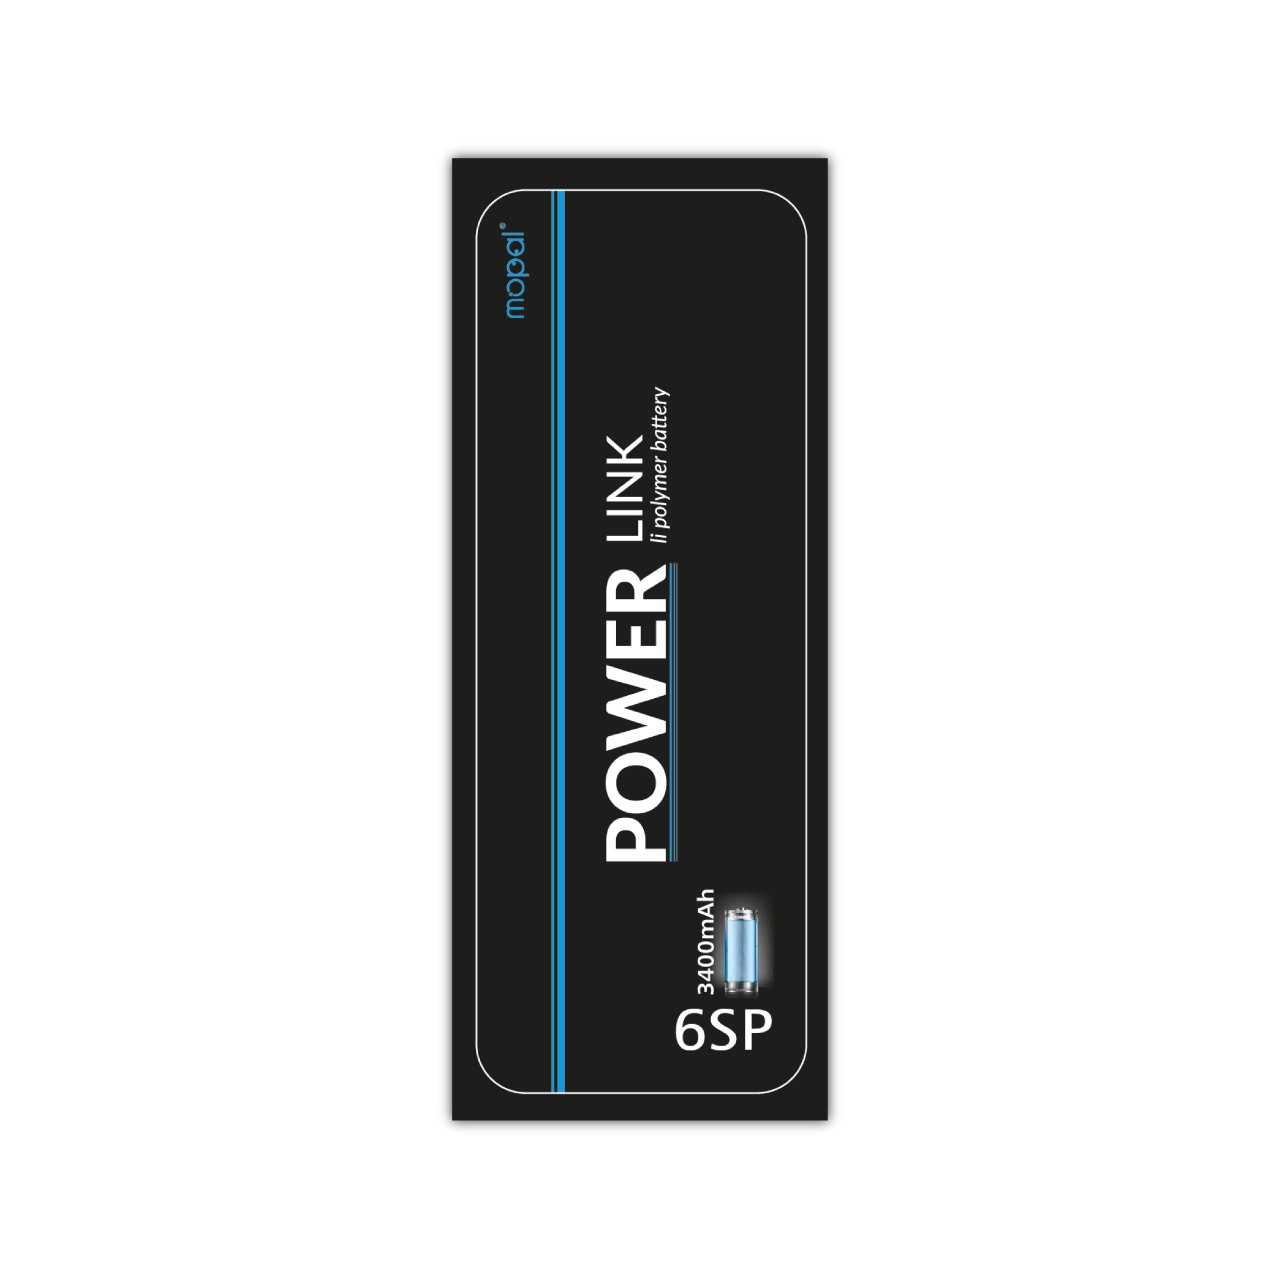 Mopal Power Link İphone 6S Plus Ekstra Güçlü 3400 Mah Batarya